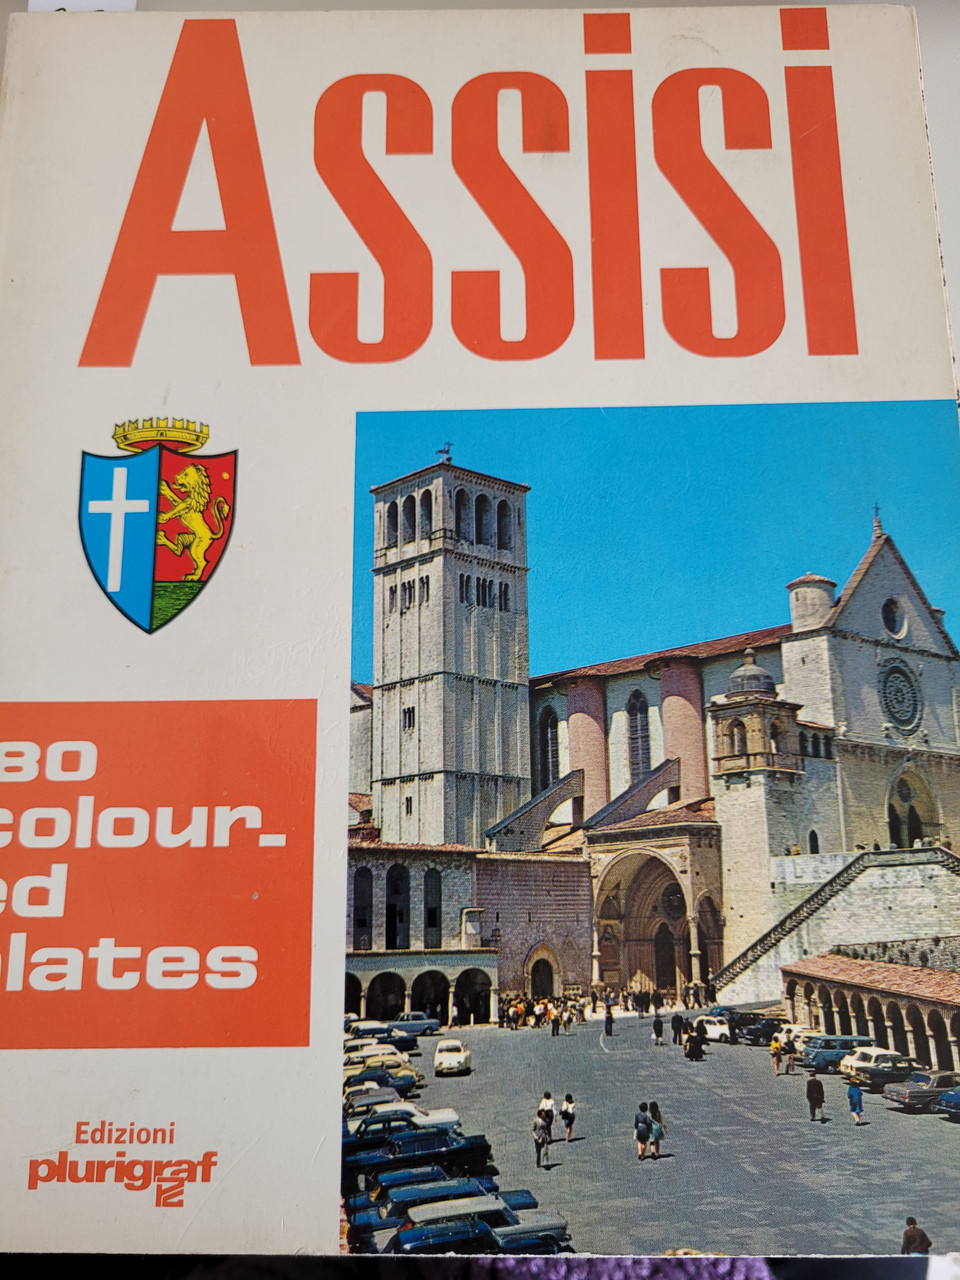 Assisi 180 coloured plates 